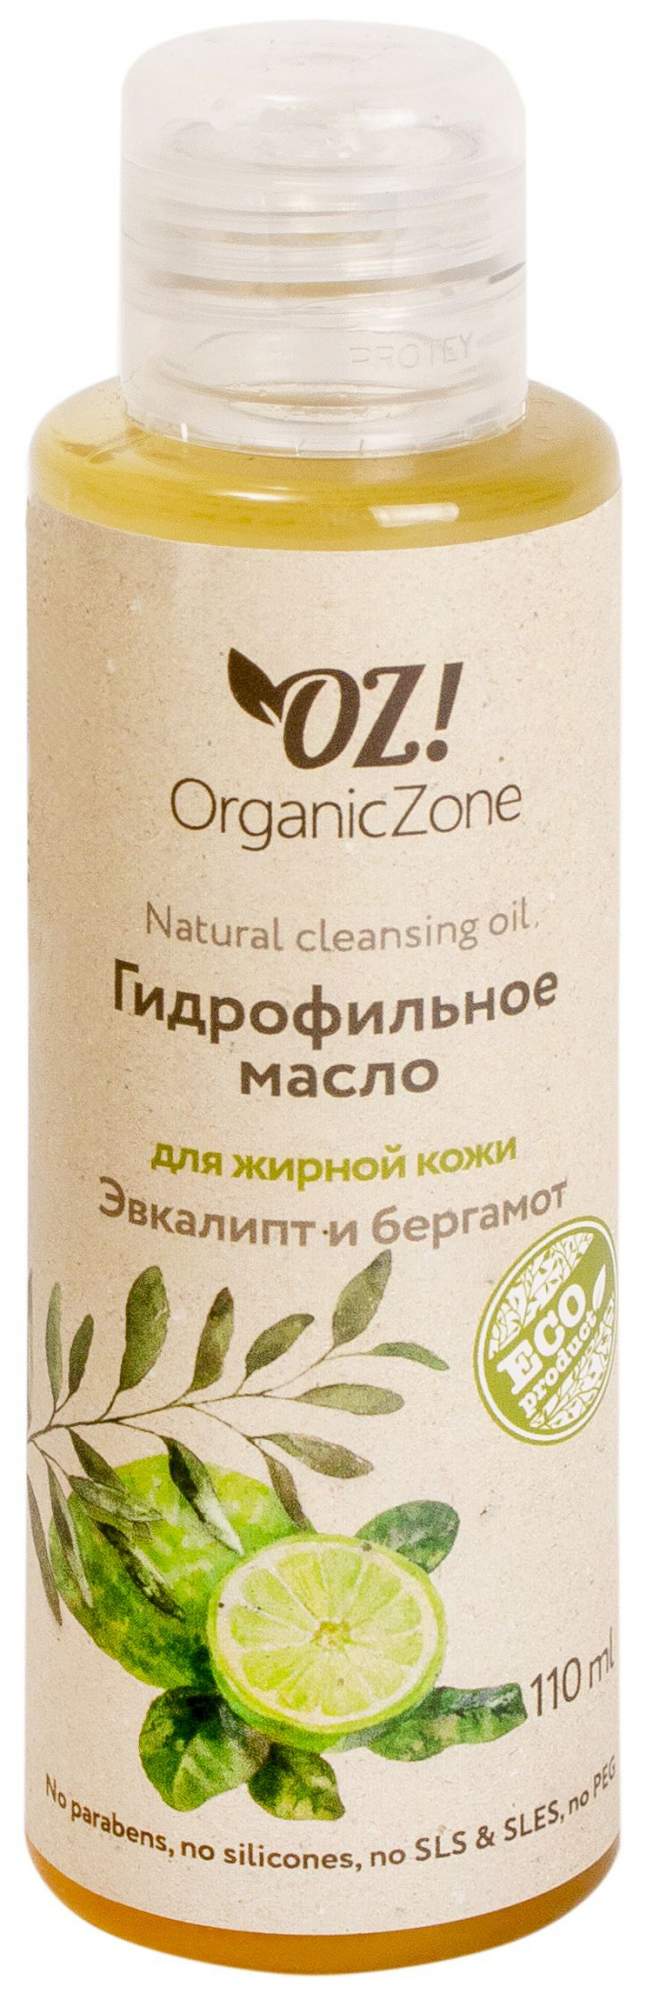 Масло для лица OrganicZone Эвкалипт и бергамот 110 мл